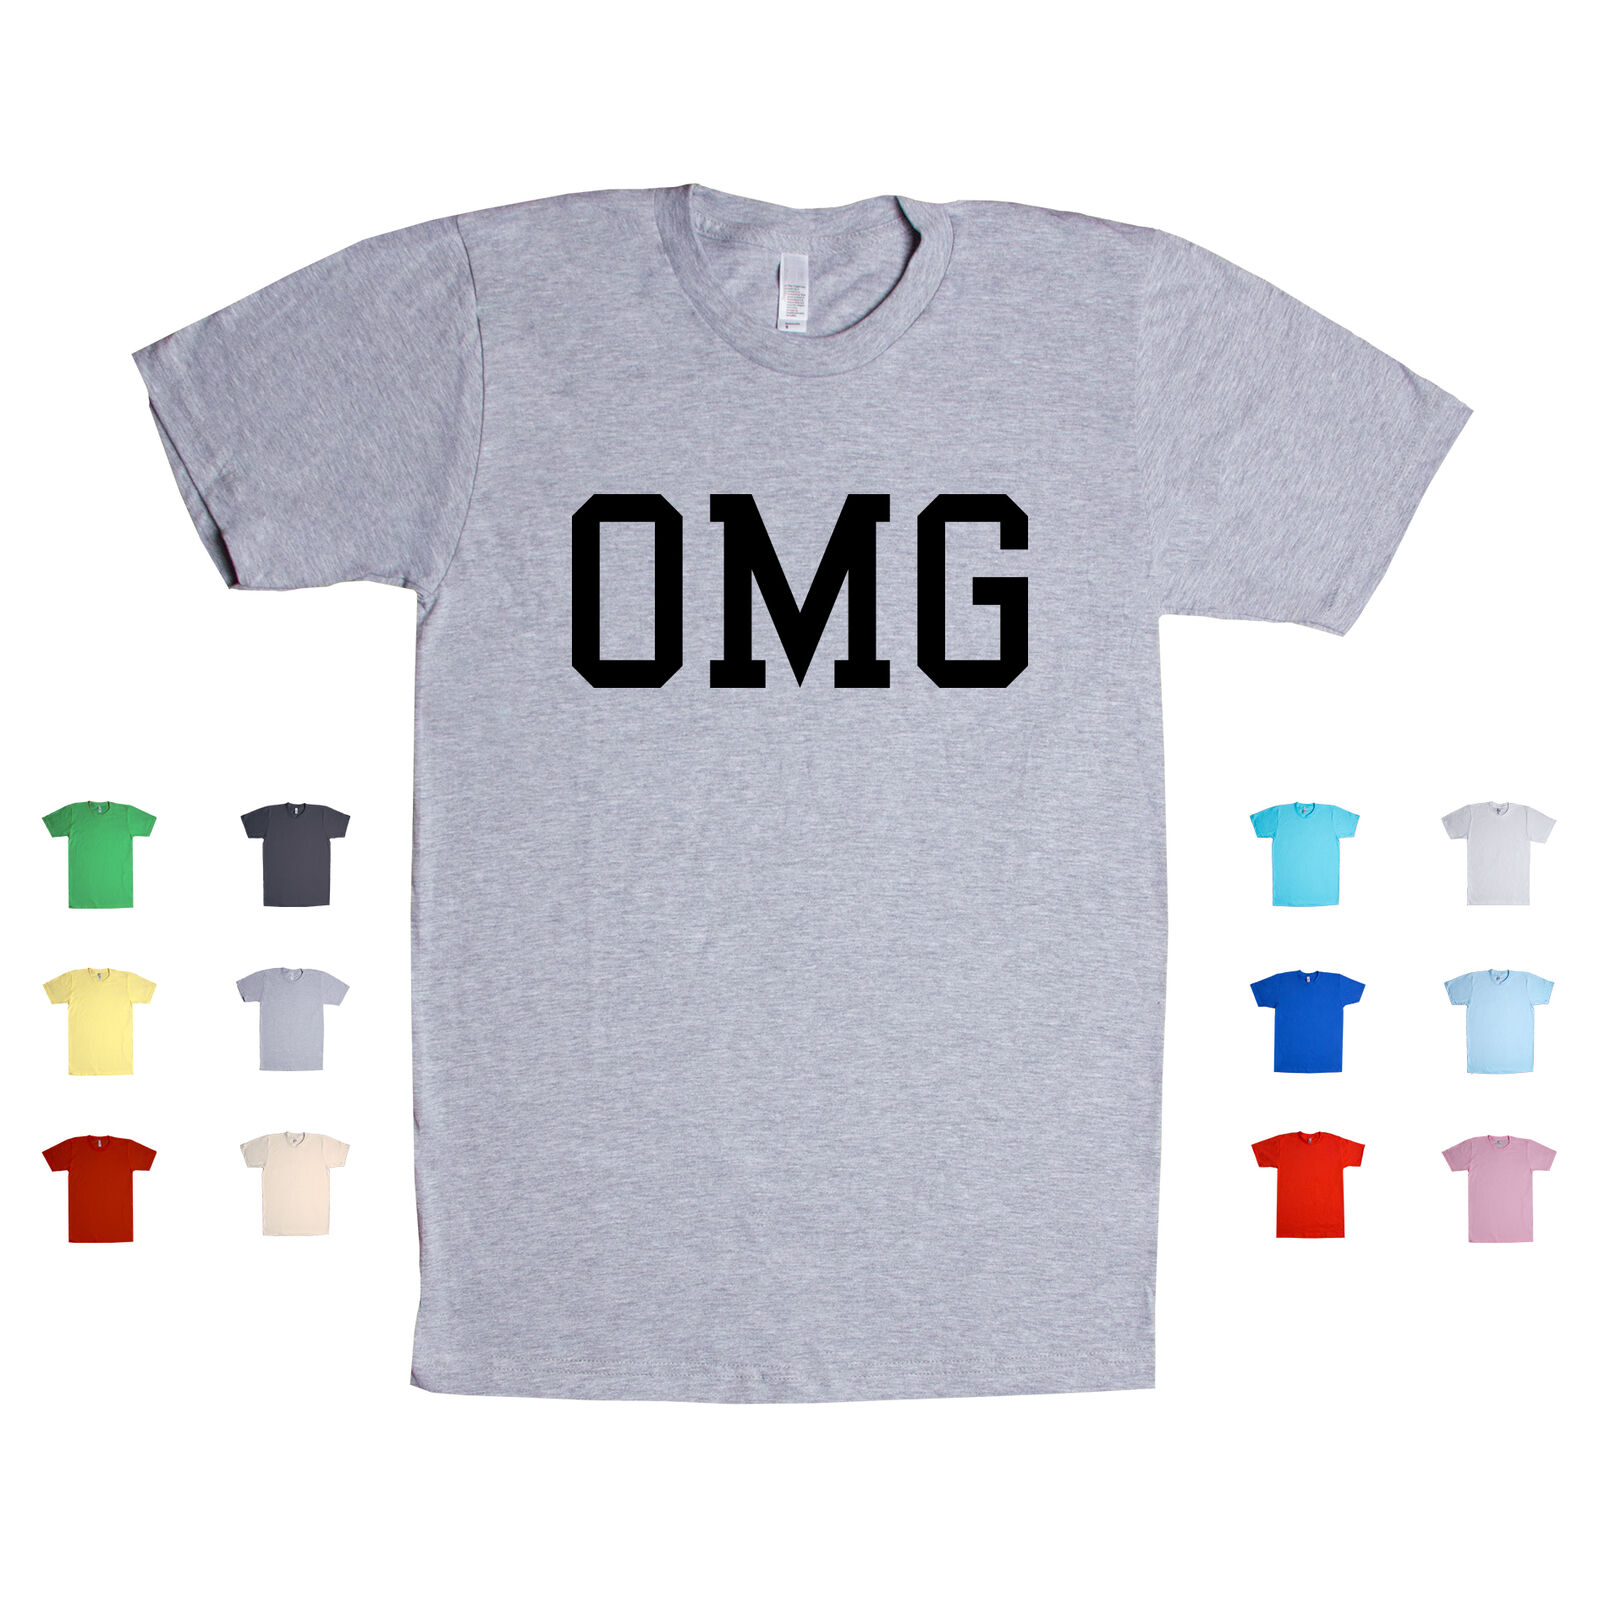 OMG oh my god gawd memes attitude internet sassy slang funny Unisex T Shirt  | eBay